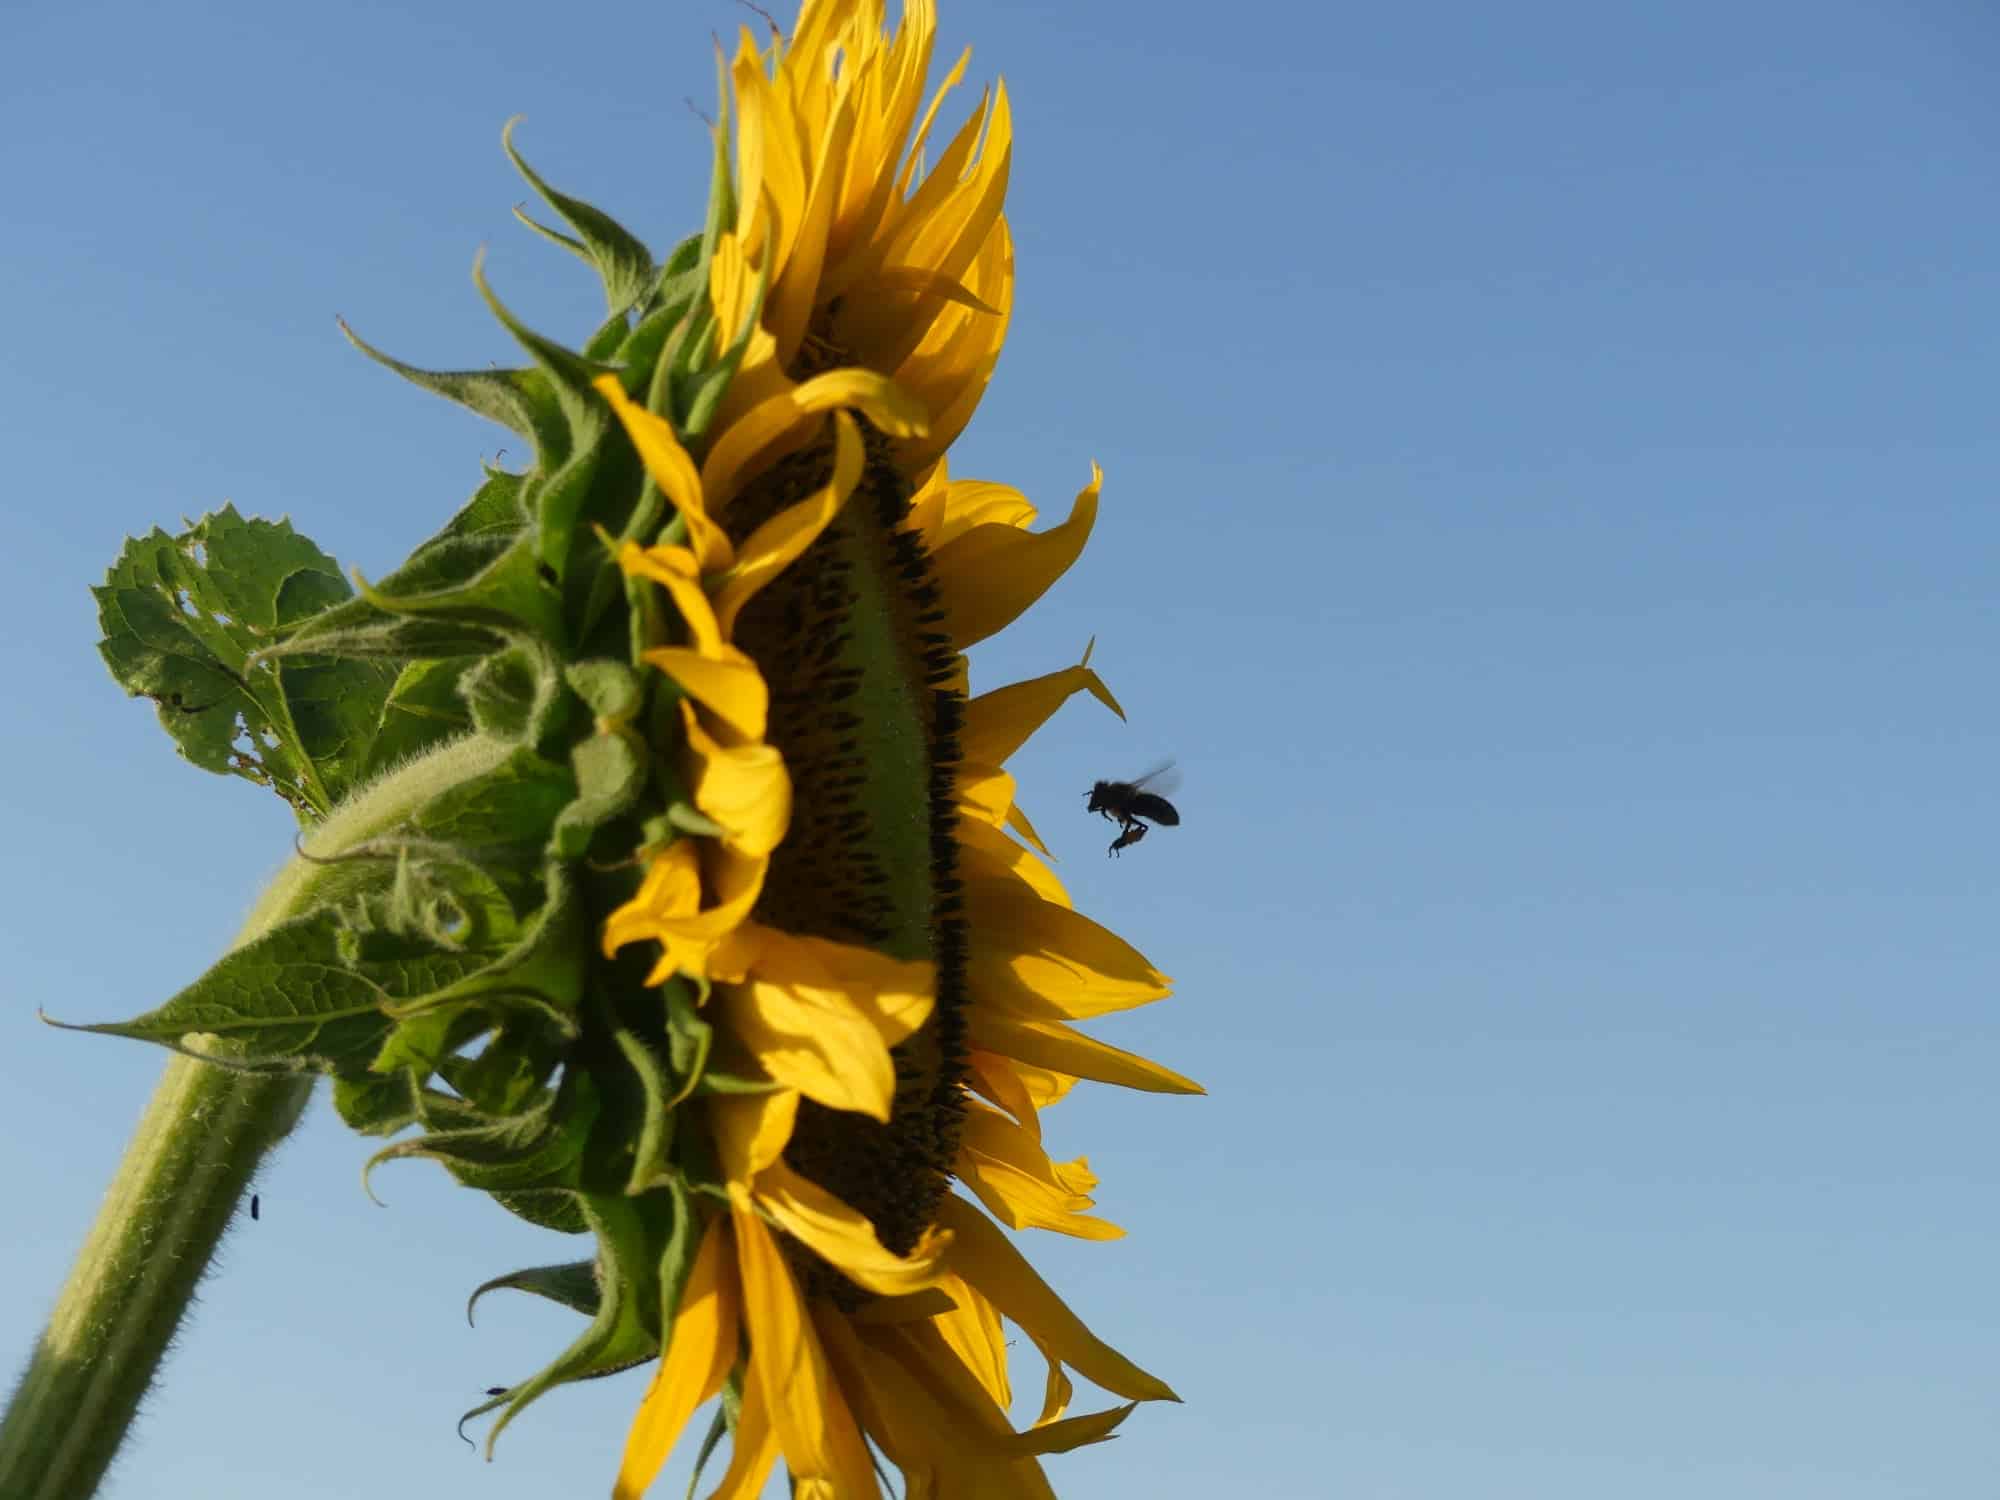 Bee approaching sunflower